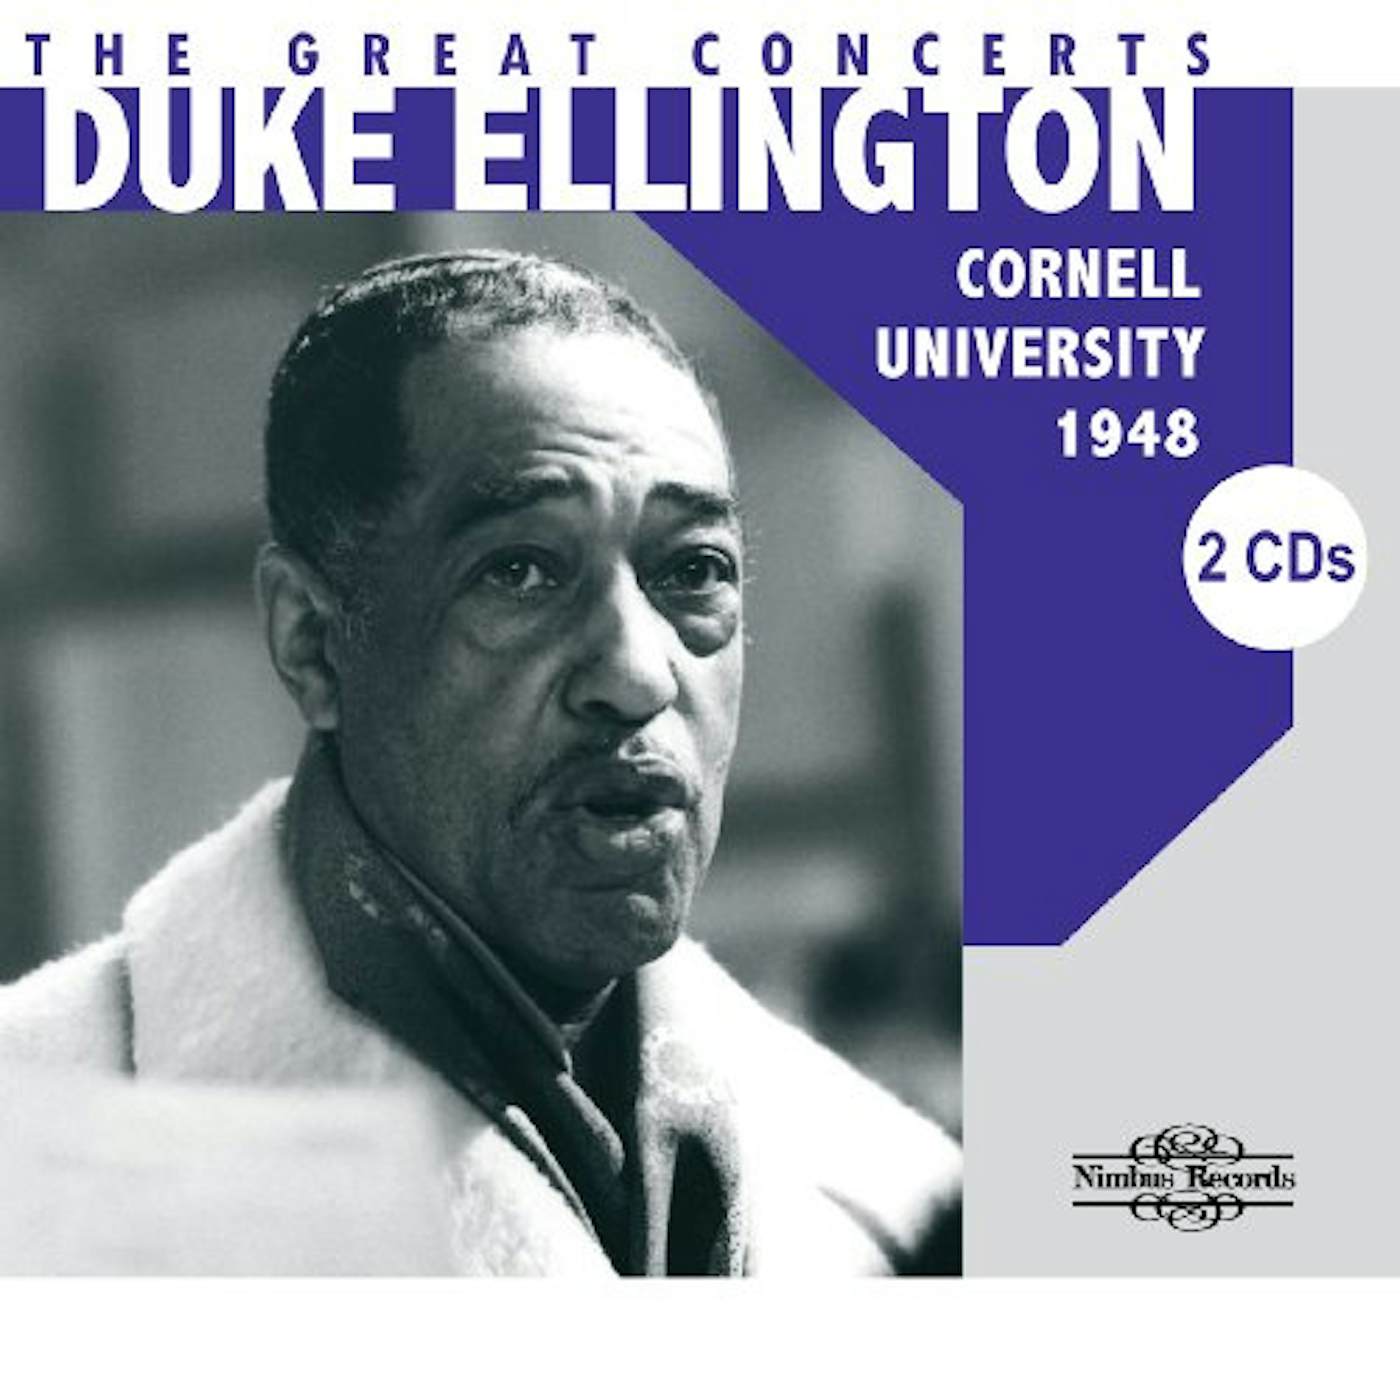 Duke Ellington GREAT CONCERTS: CORNELL UNIVERSITY 1948 CD